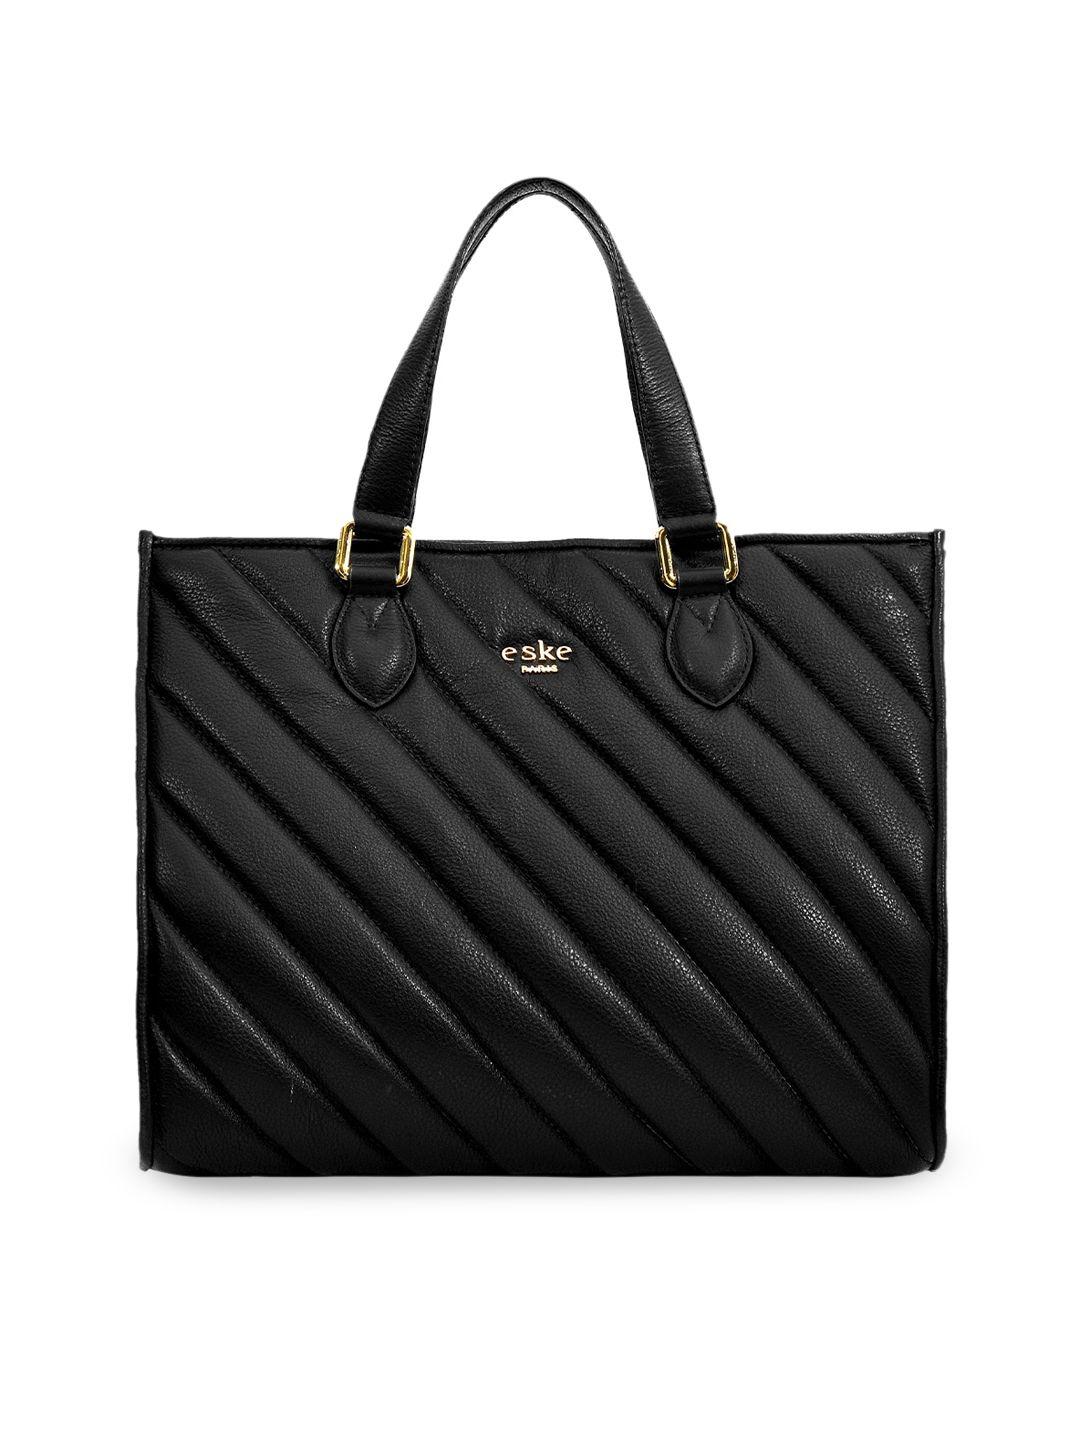 eske women black  leather shopper tote bag